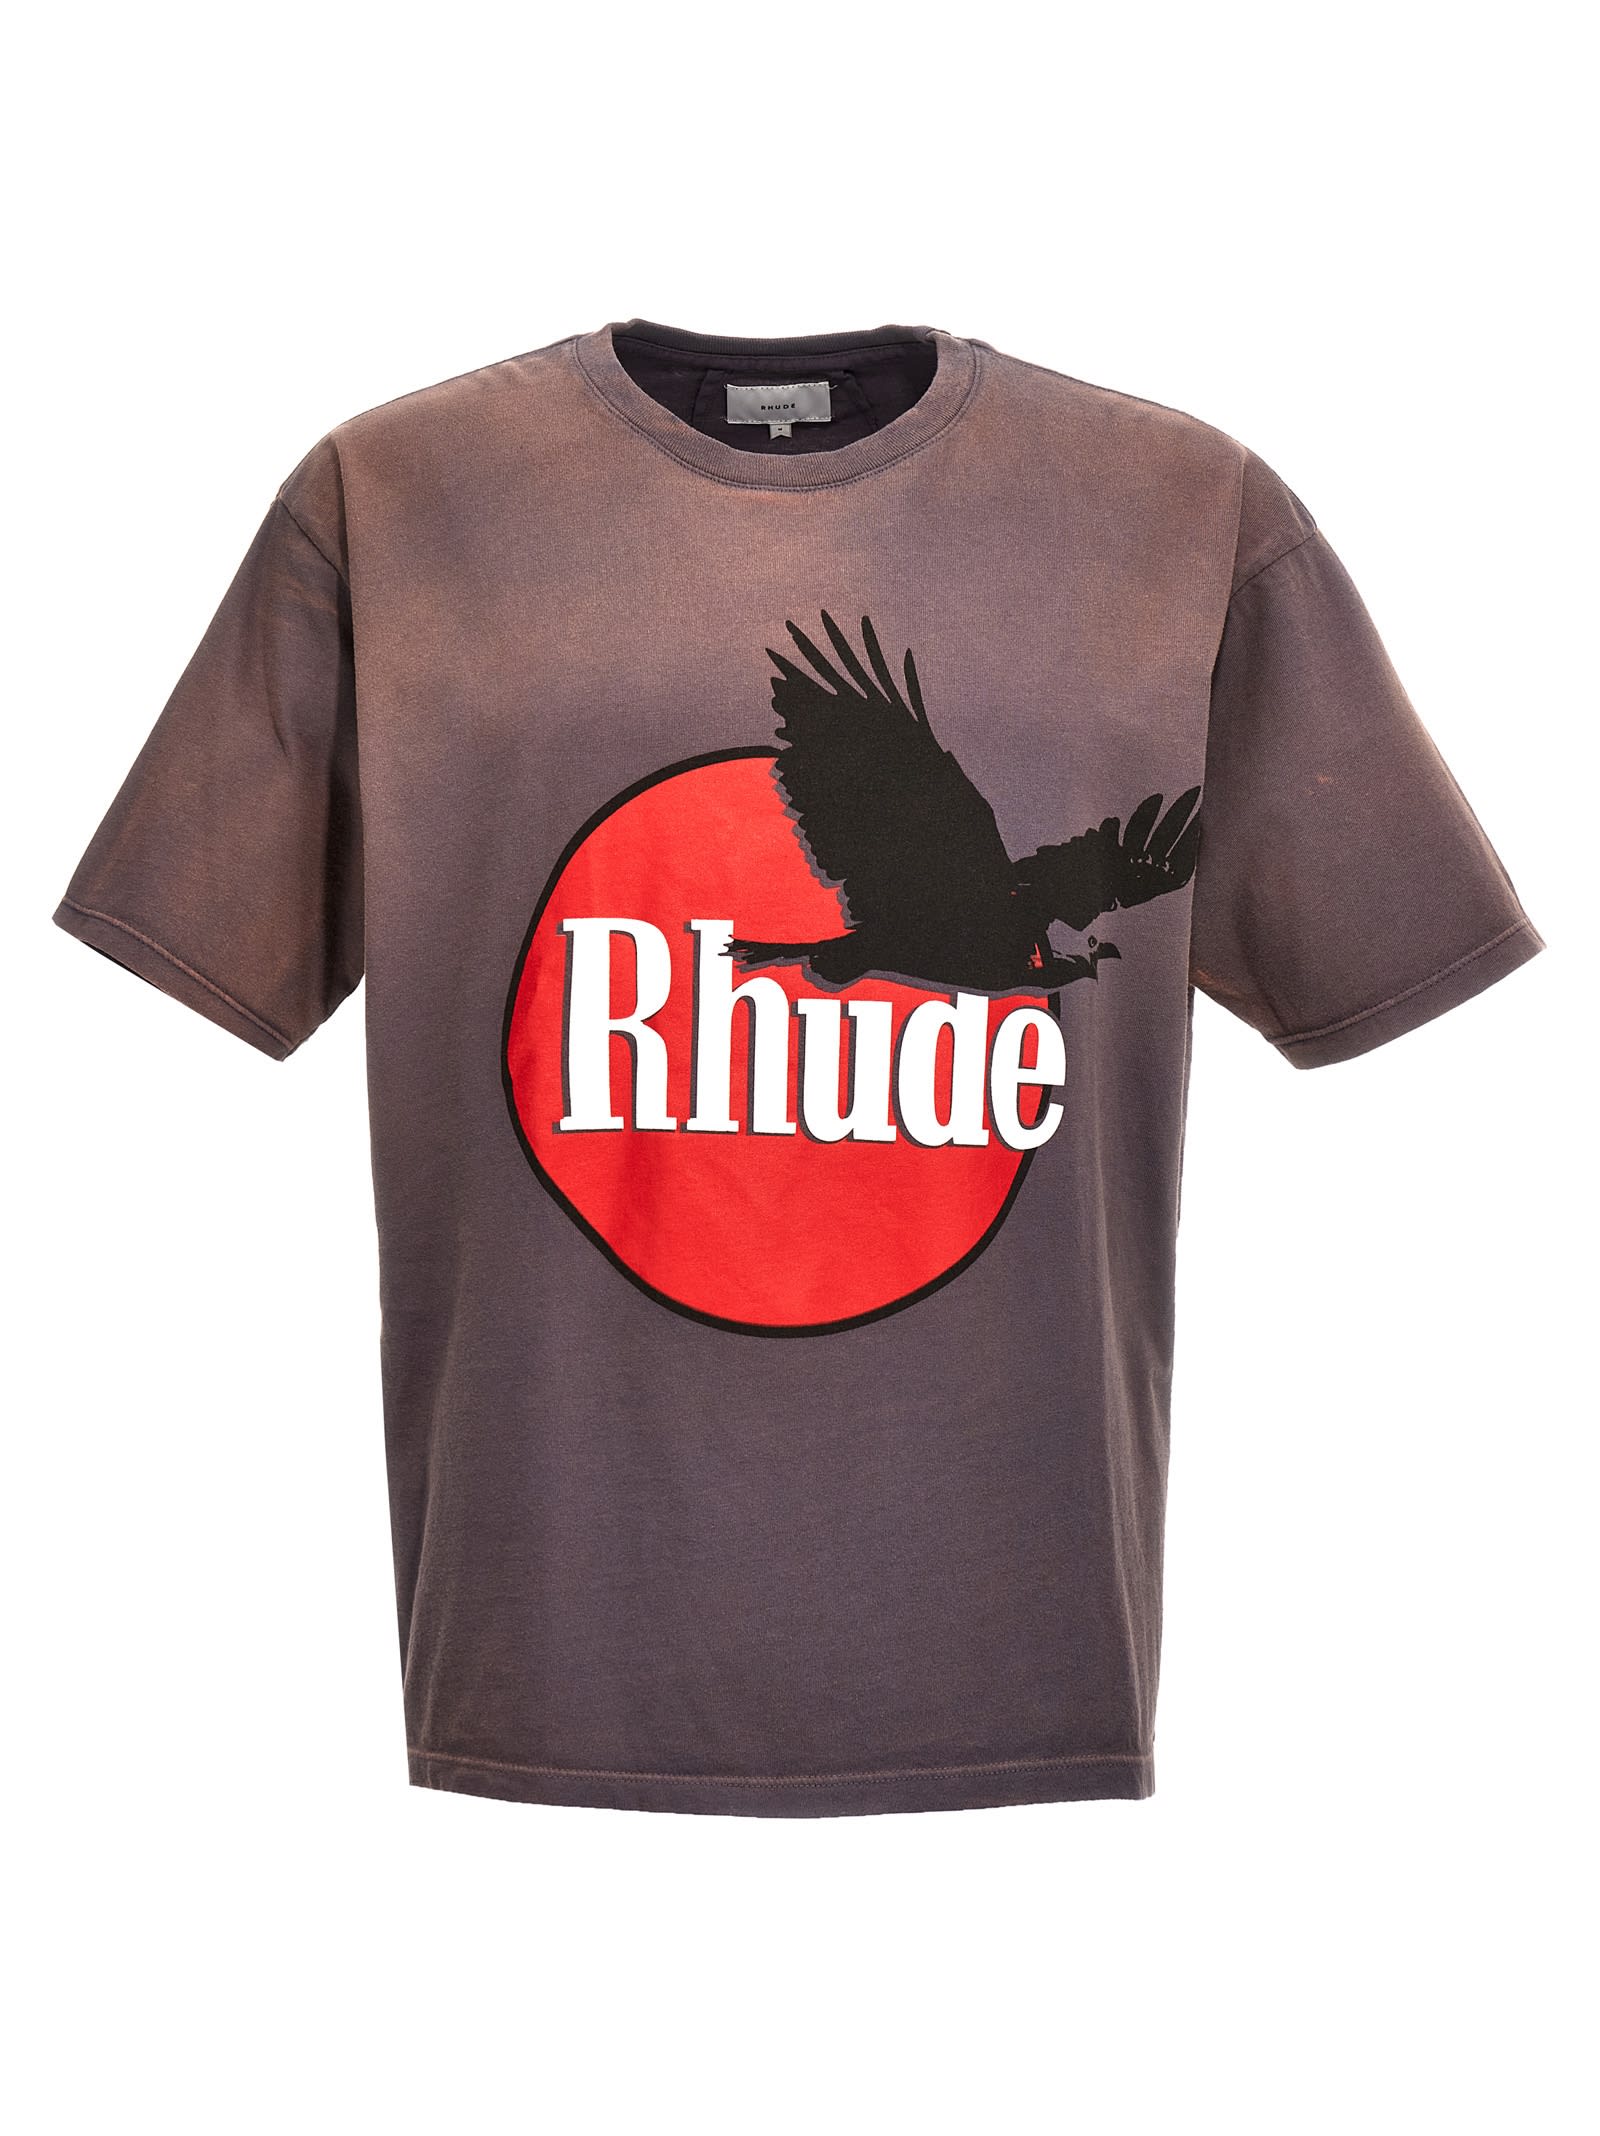 RHUDE EAGLE LOGO T-SHIRT